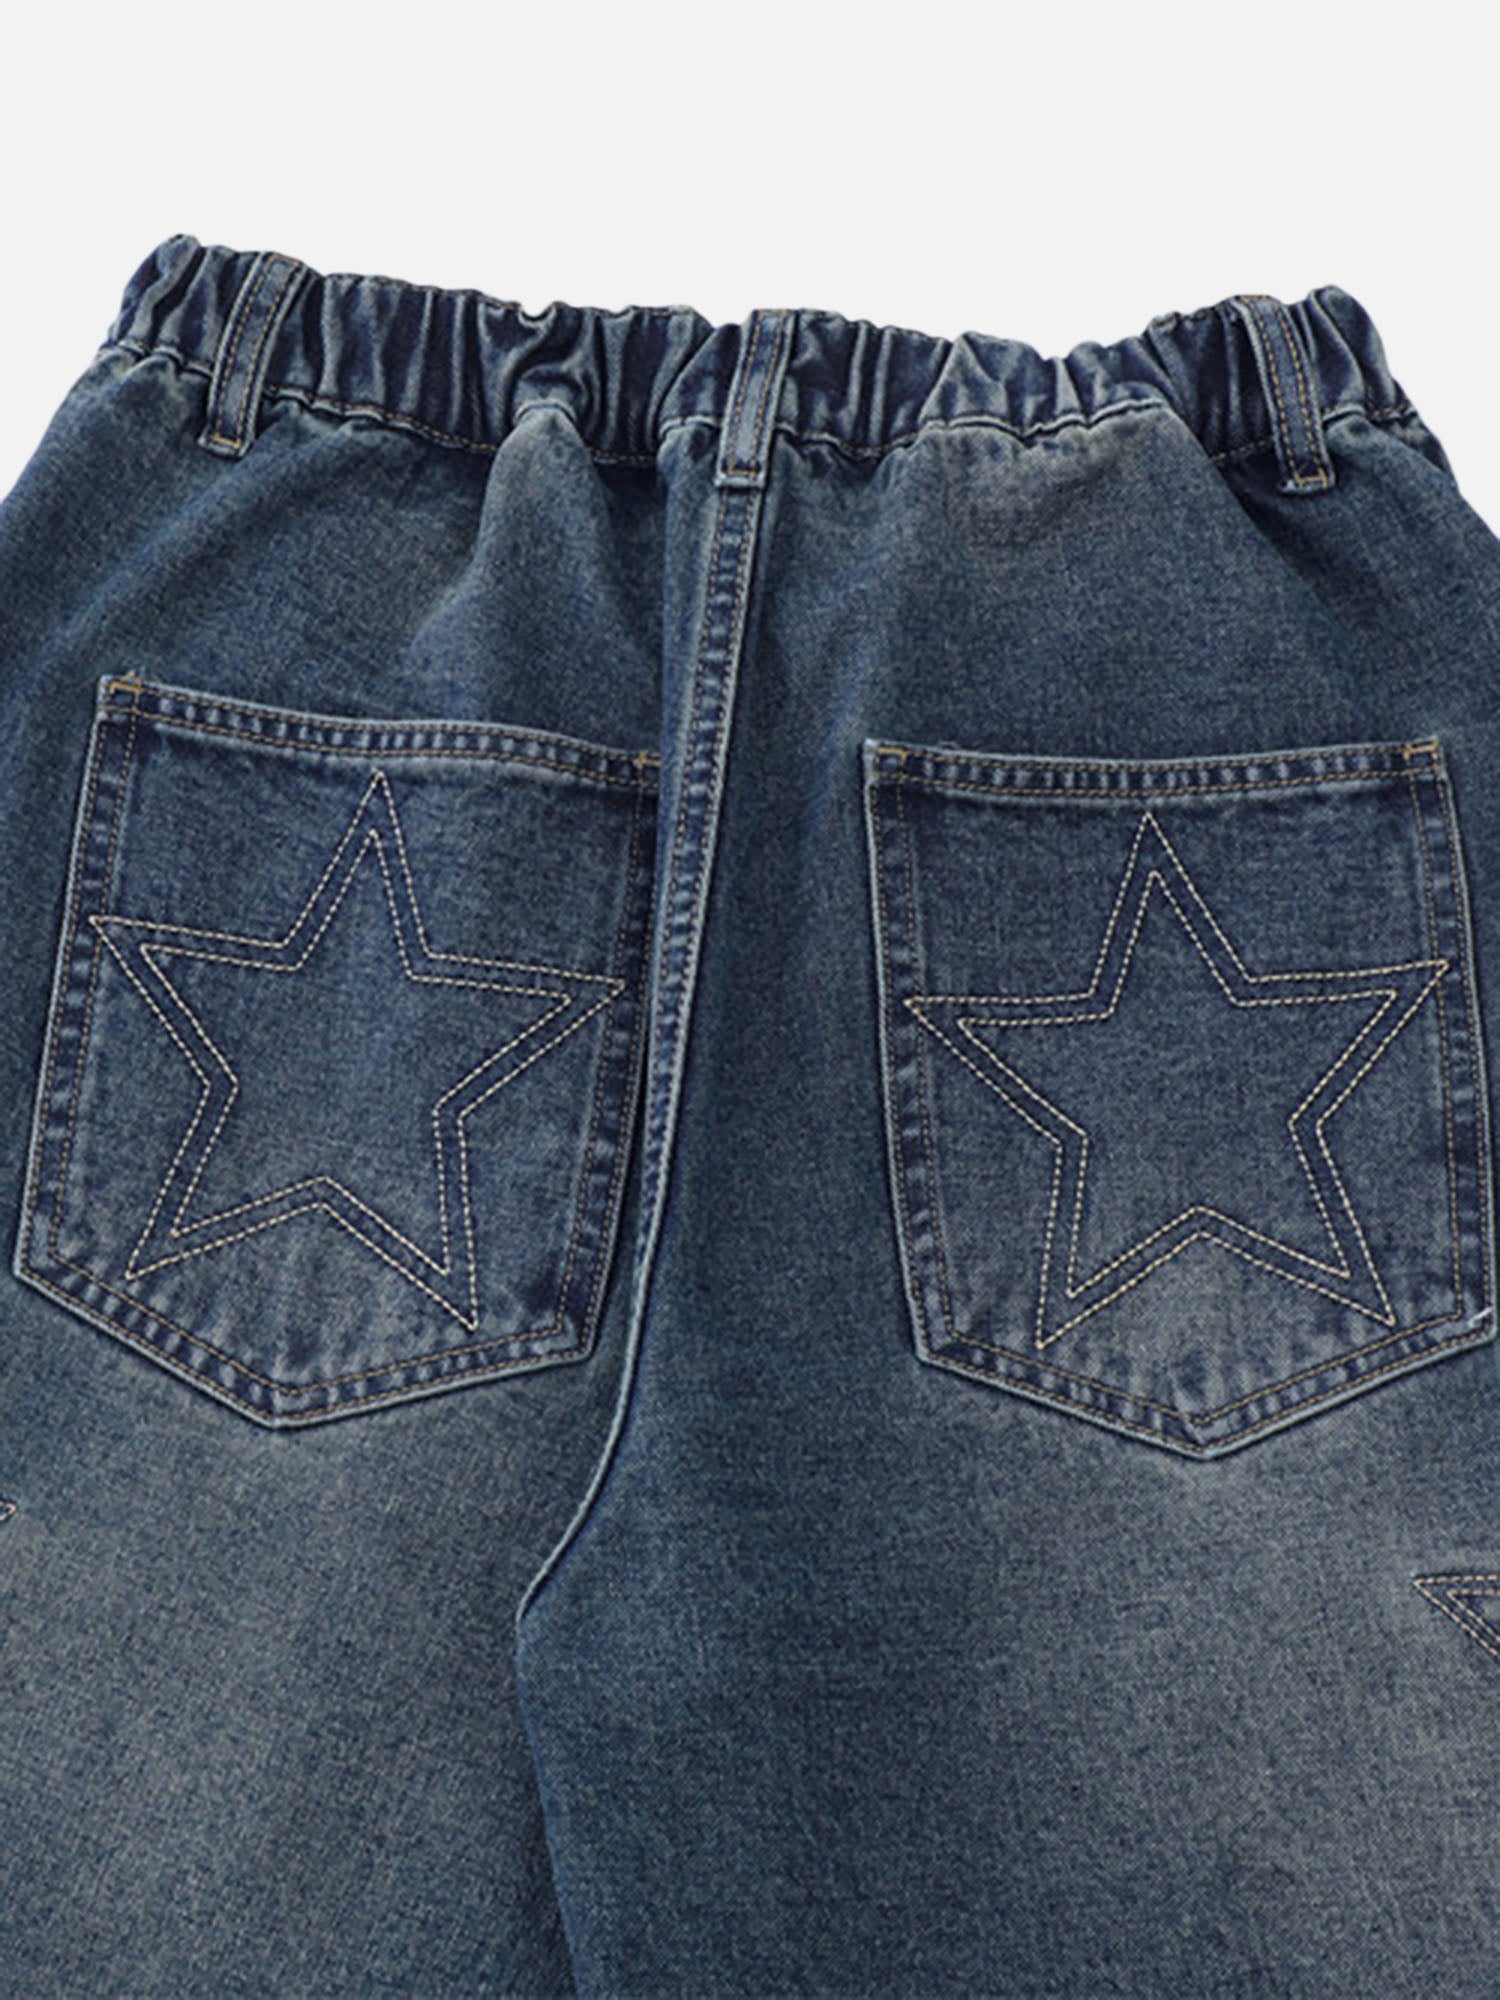 High Street Patchwork Star Embroidered Denim Shorts